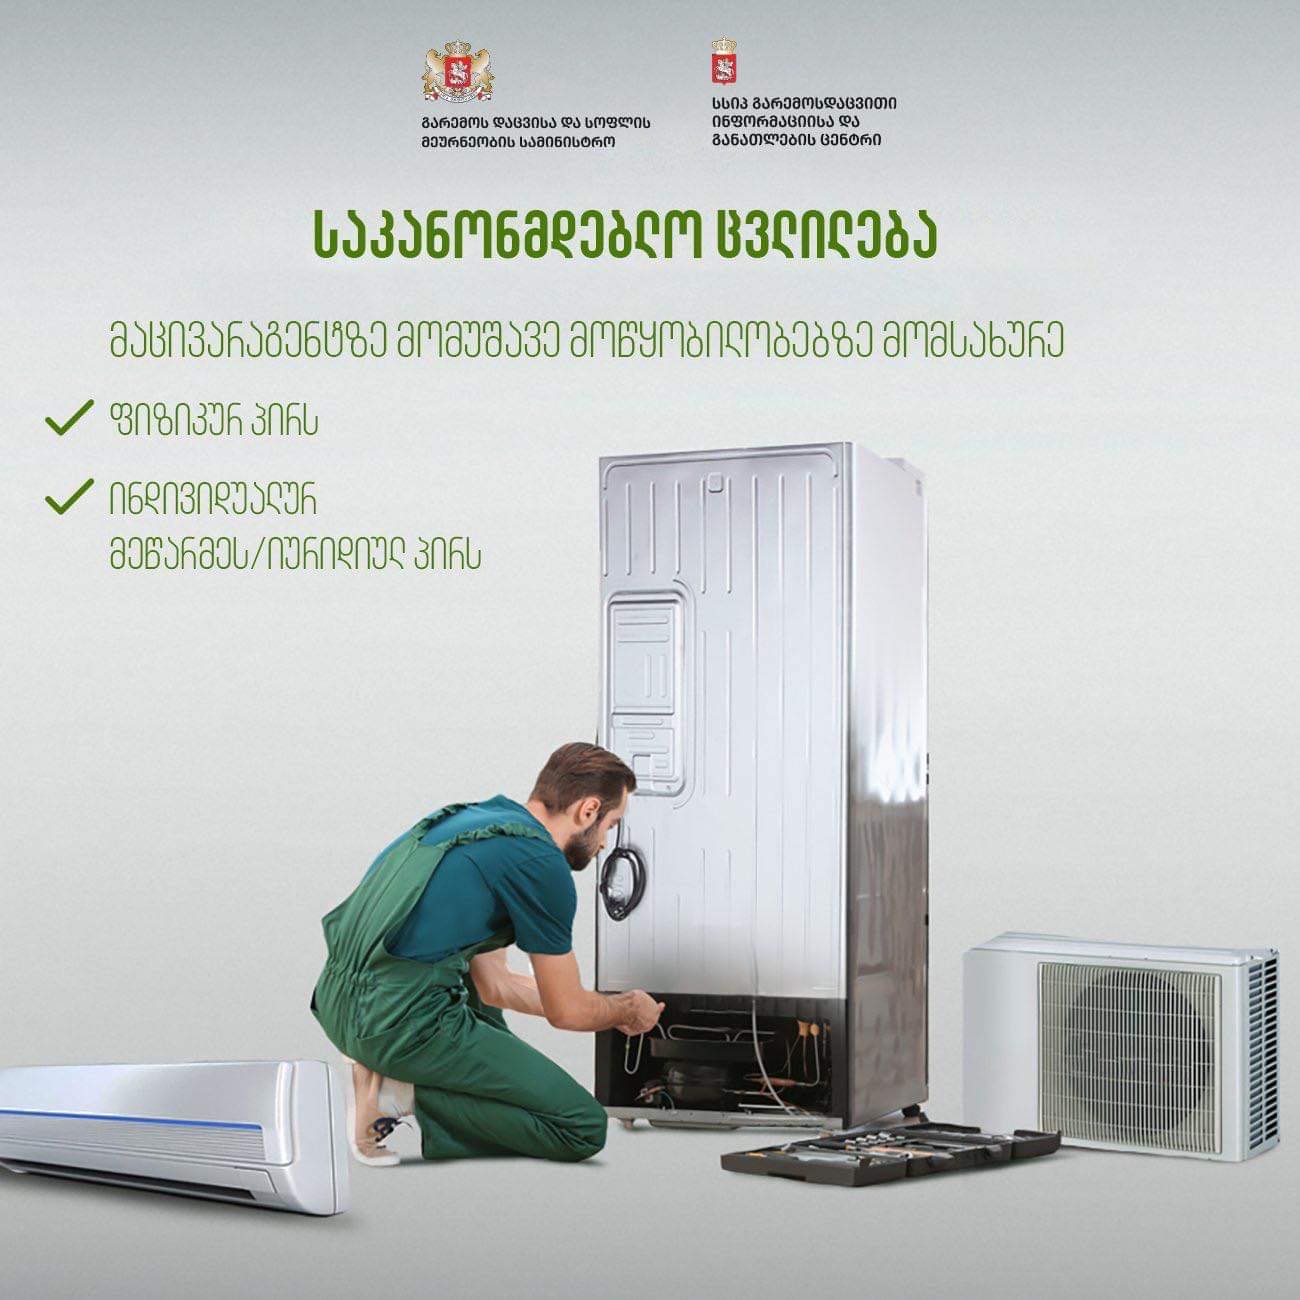 Legislative change for persons servicing refrigerant equipment